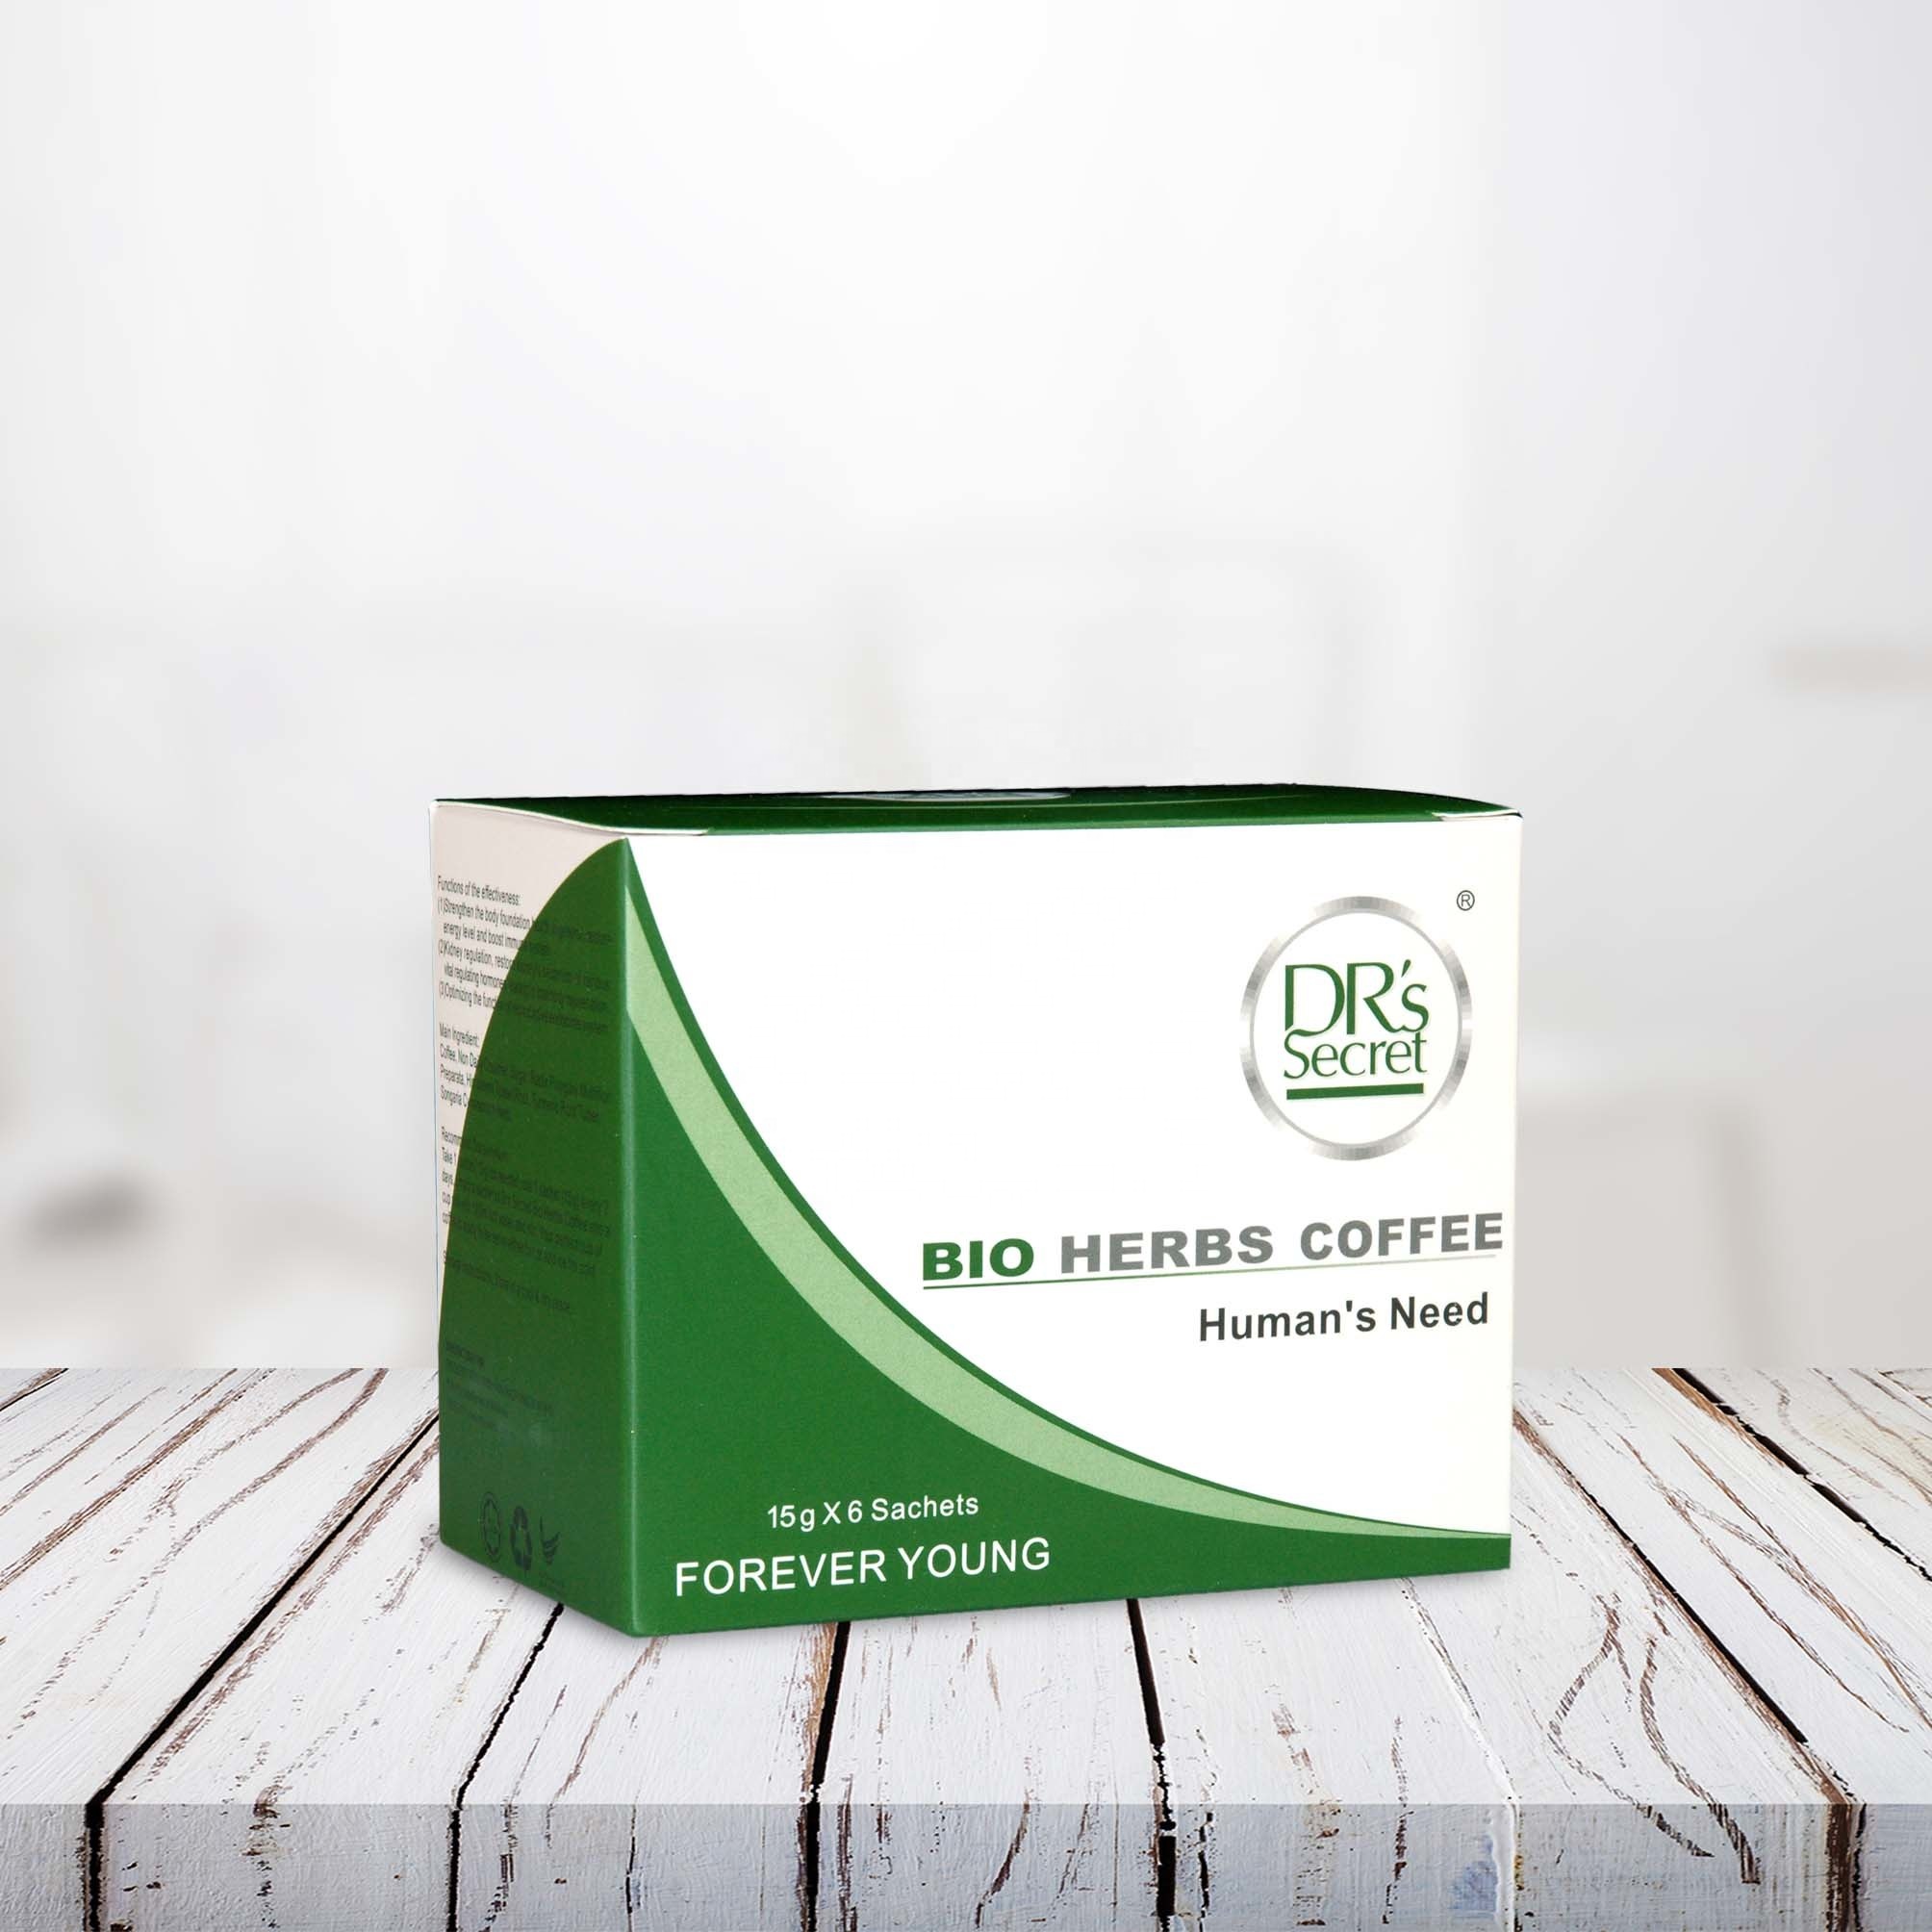 Drs Secret Bio Herbs Coffee :15g x 6 Sachets. 